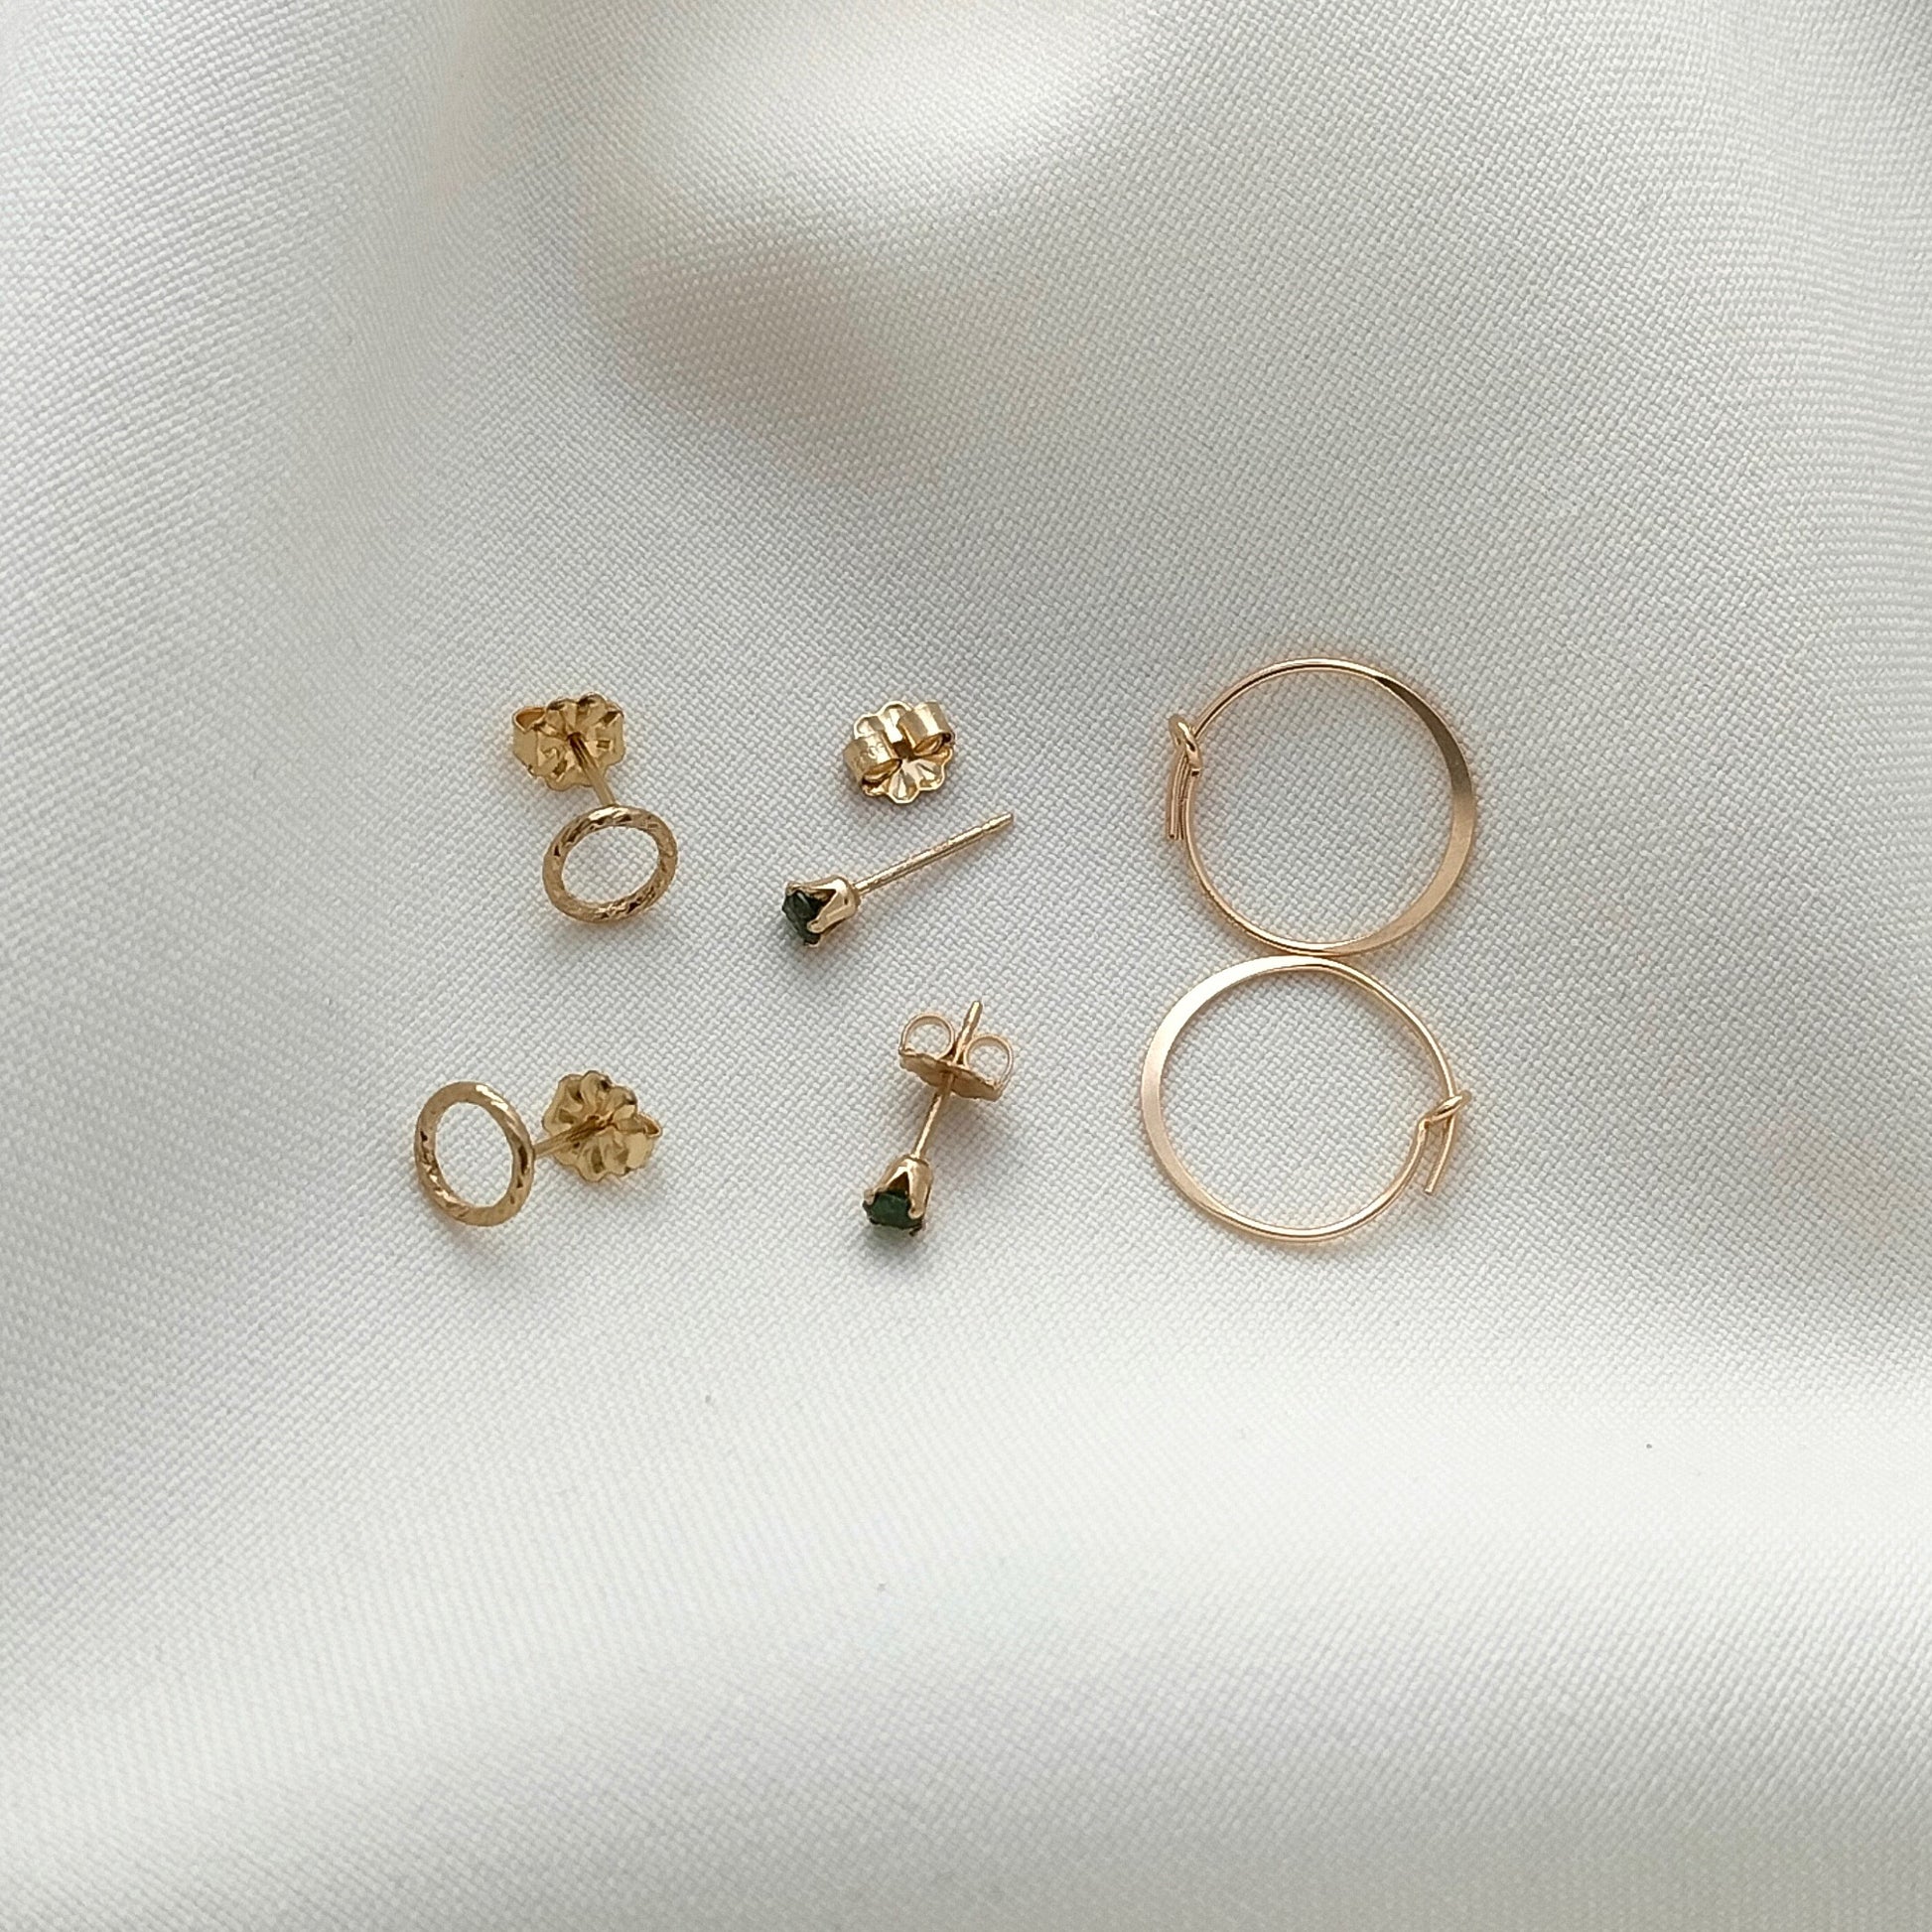 Gold Circle earring stud set